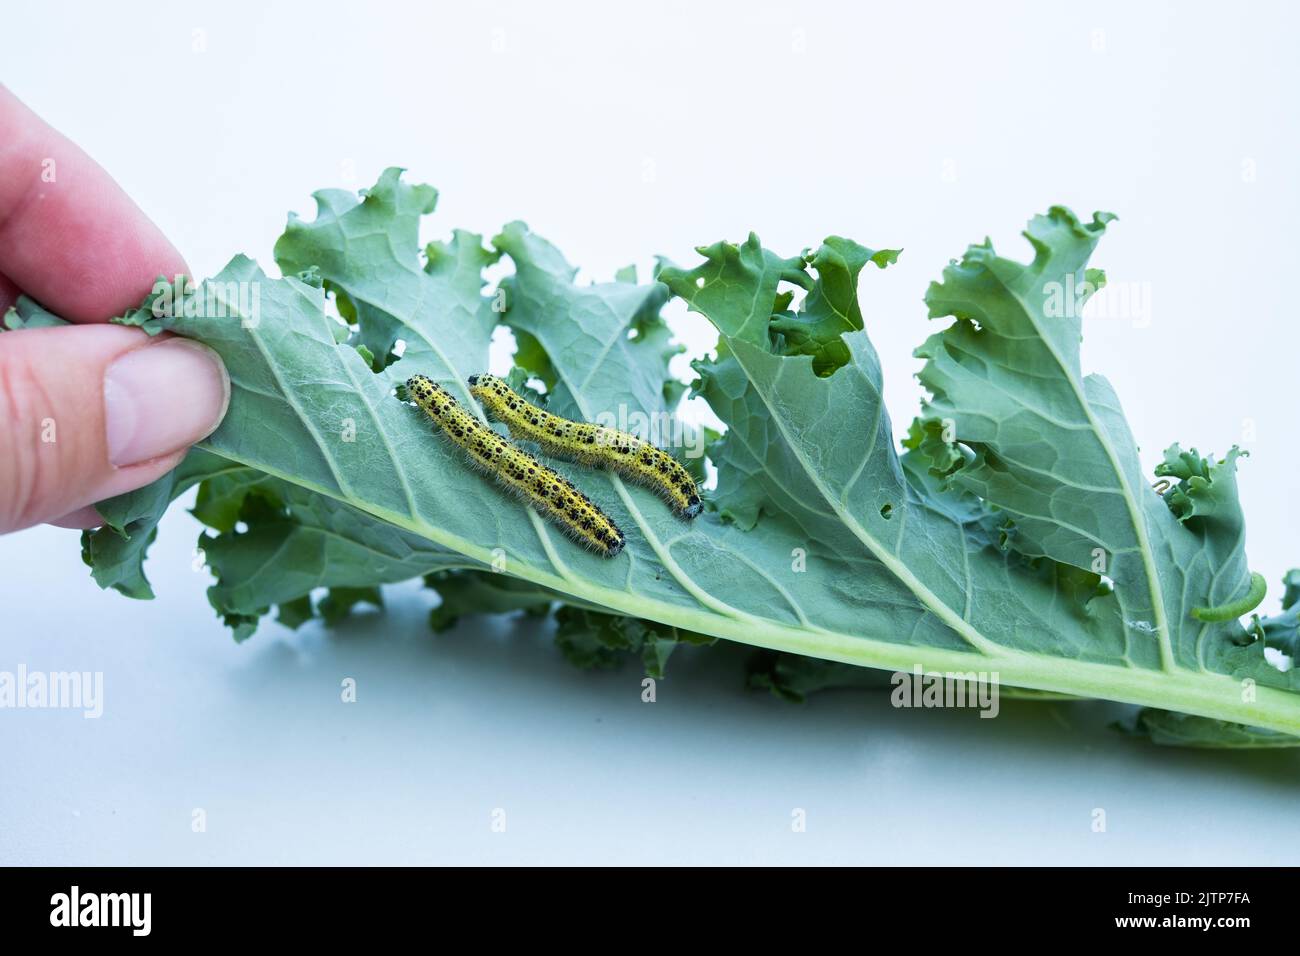 Caterpillars eating kale cabbage on white background. Stock Photo